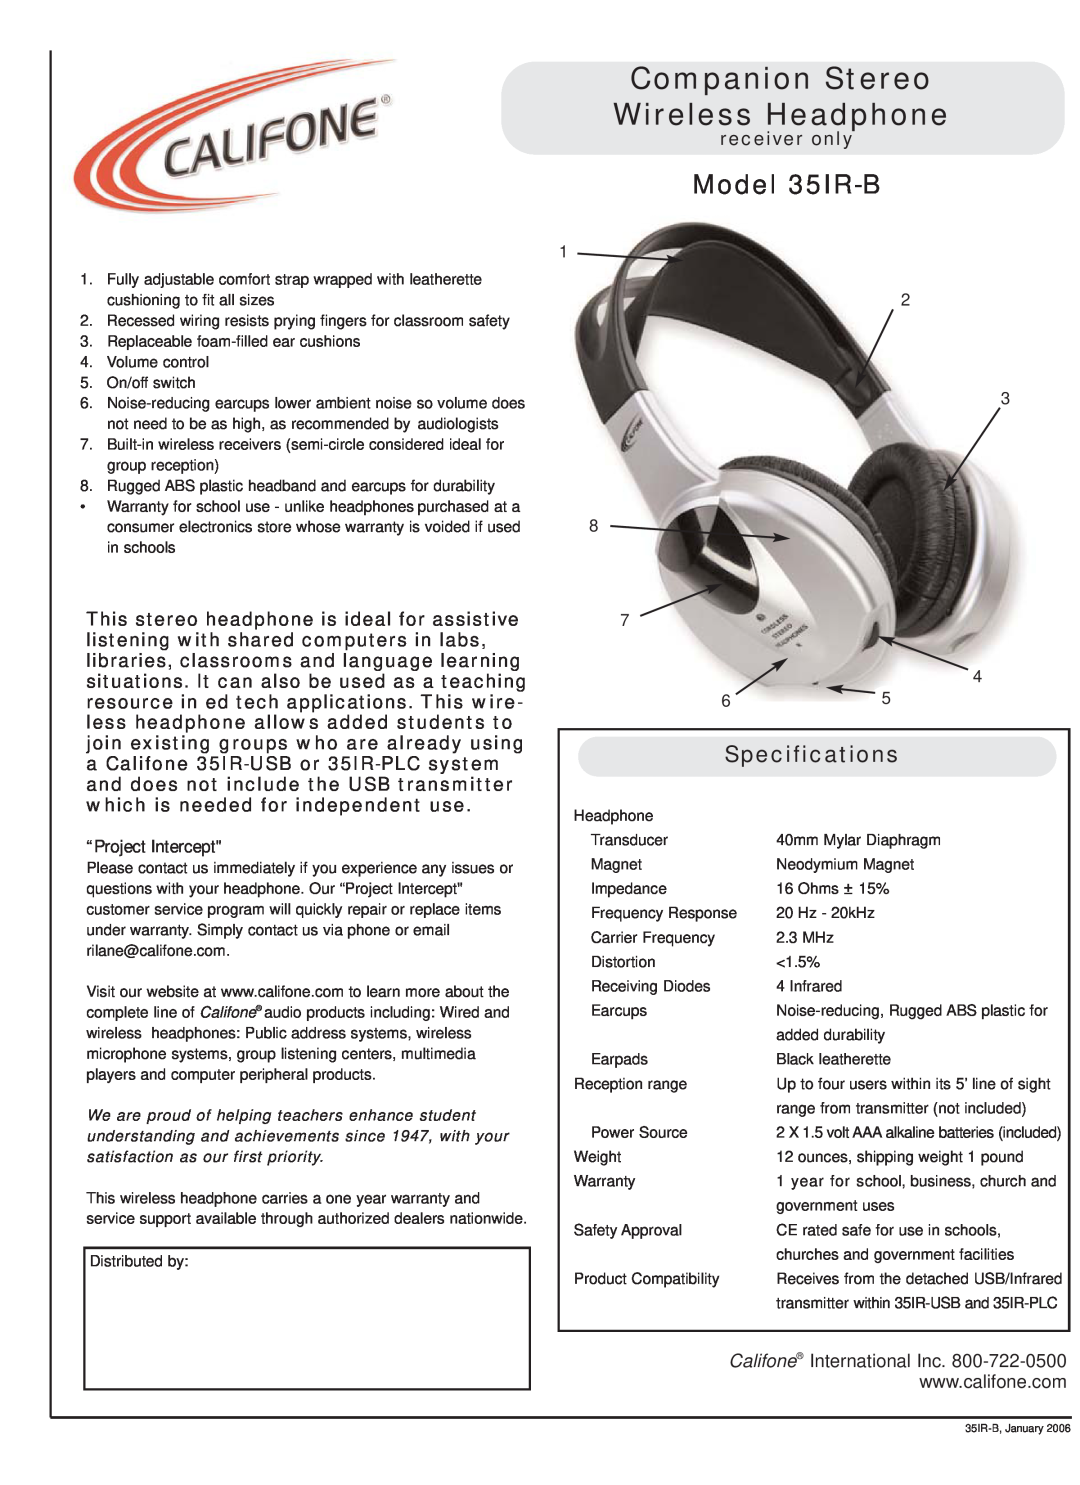 Califone specifications Companion Stereo Wireless Headphone, Model 35IR-B, Specifications, “Project Intercept 